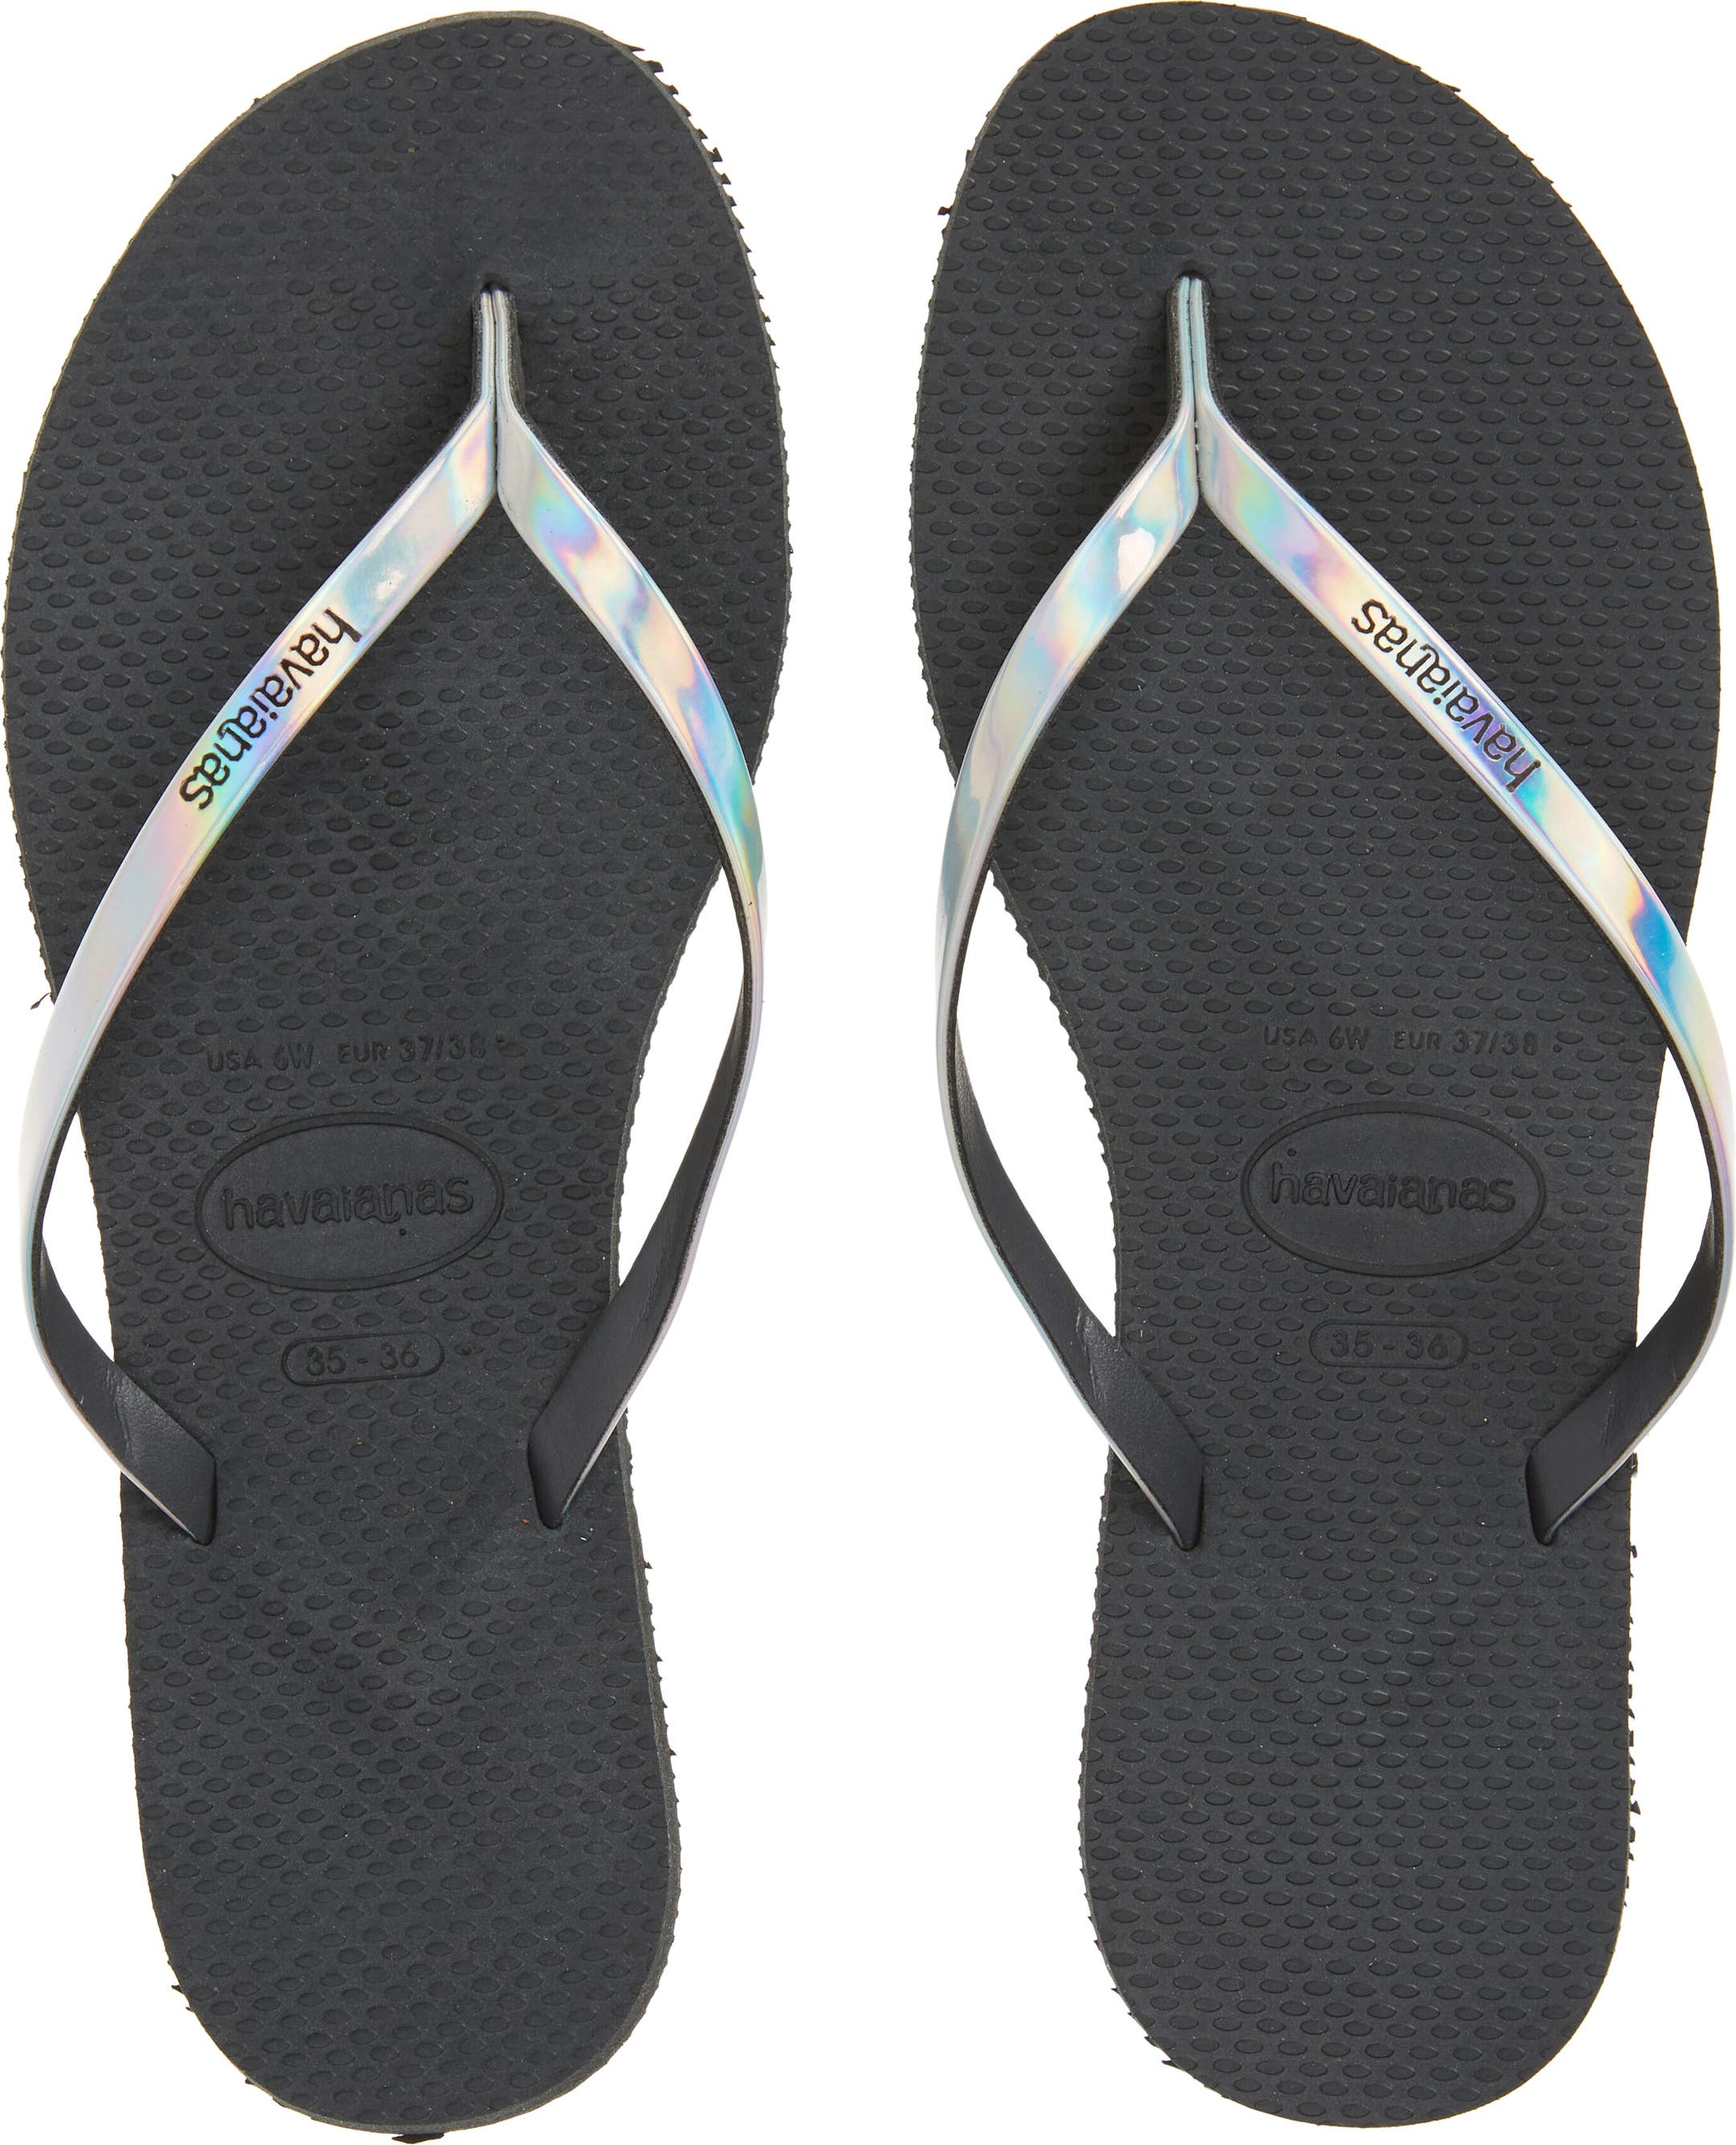 Havaianas Men's Flip-Flop Sandals Urban Basic Thong Beach Summer Comfort Walking